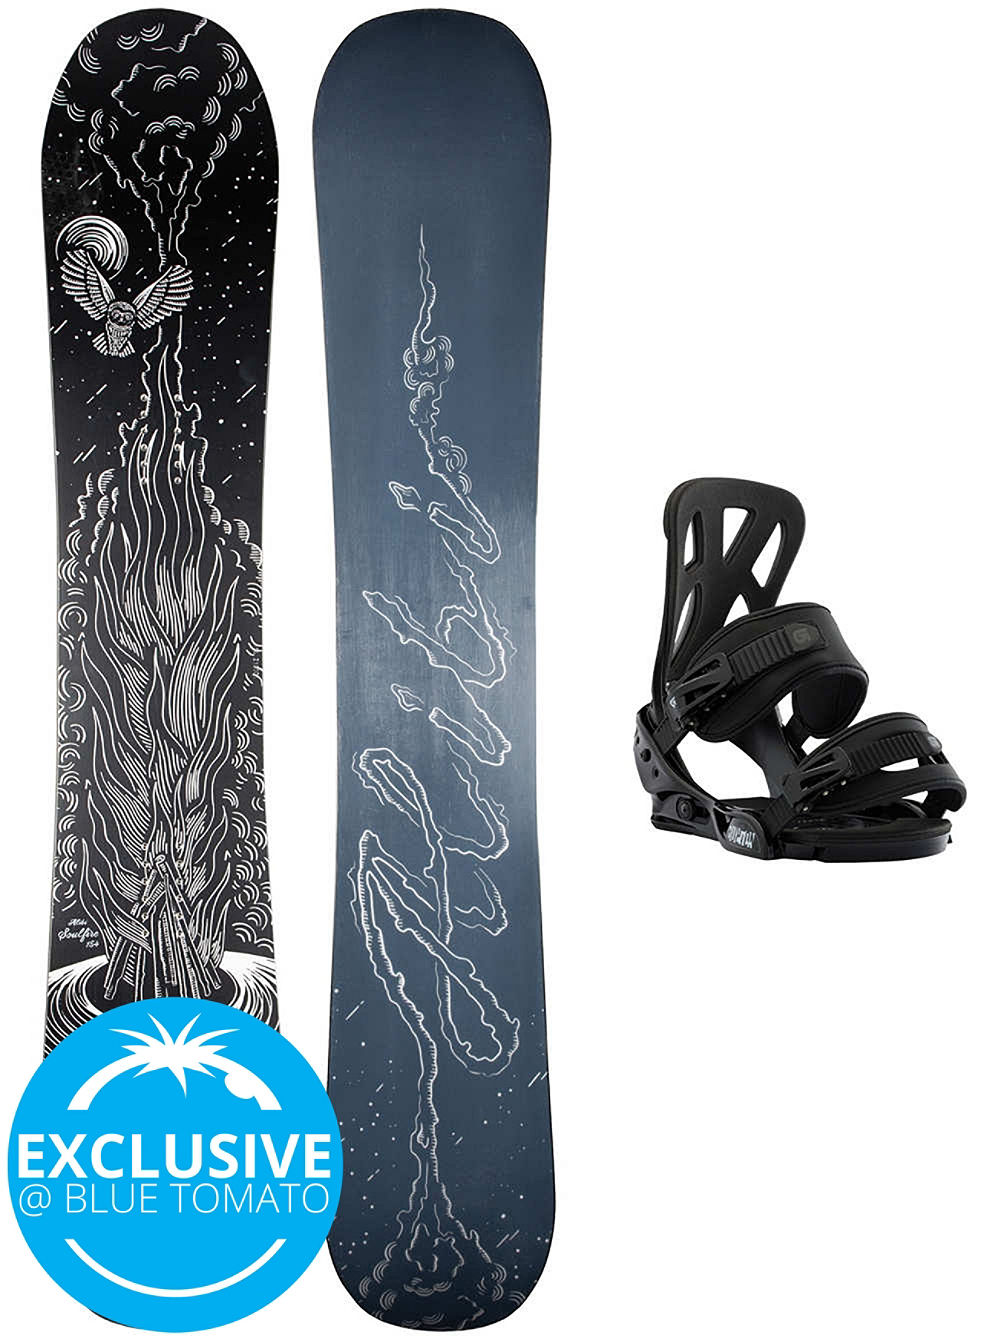 Soulfire 140 + Burton Smalls L 2021 Snowboards&aelig;t